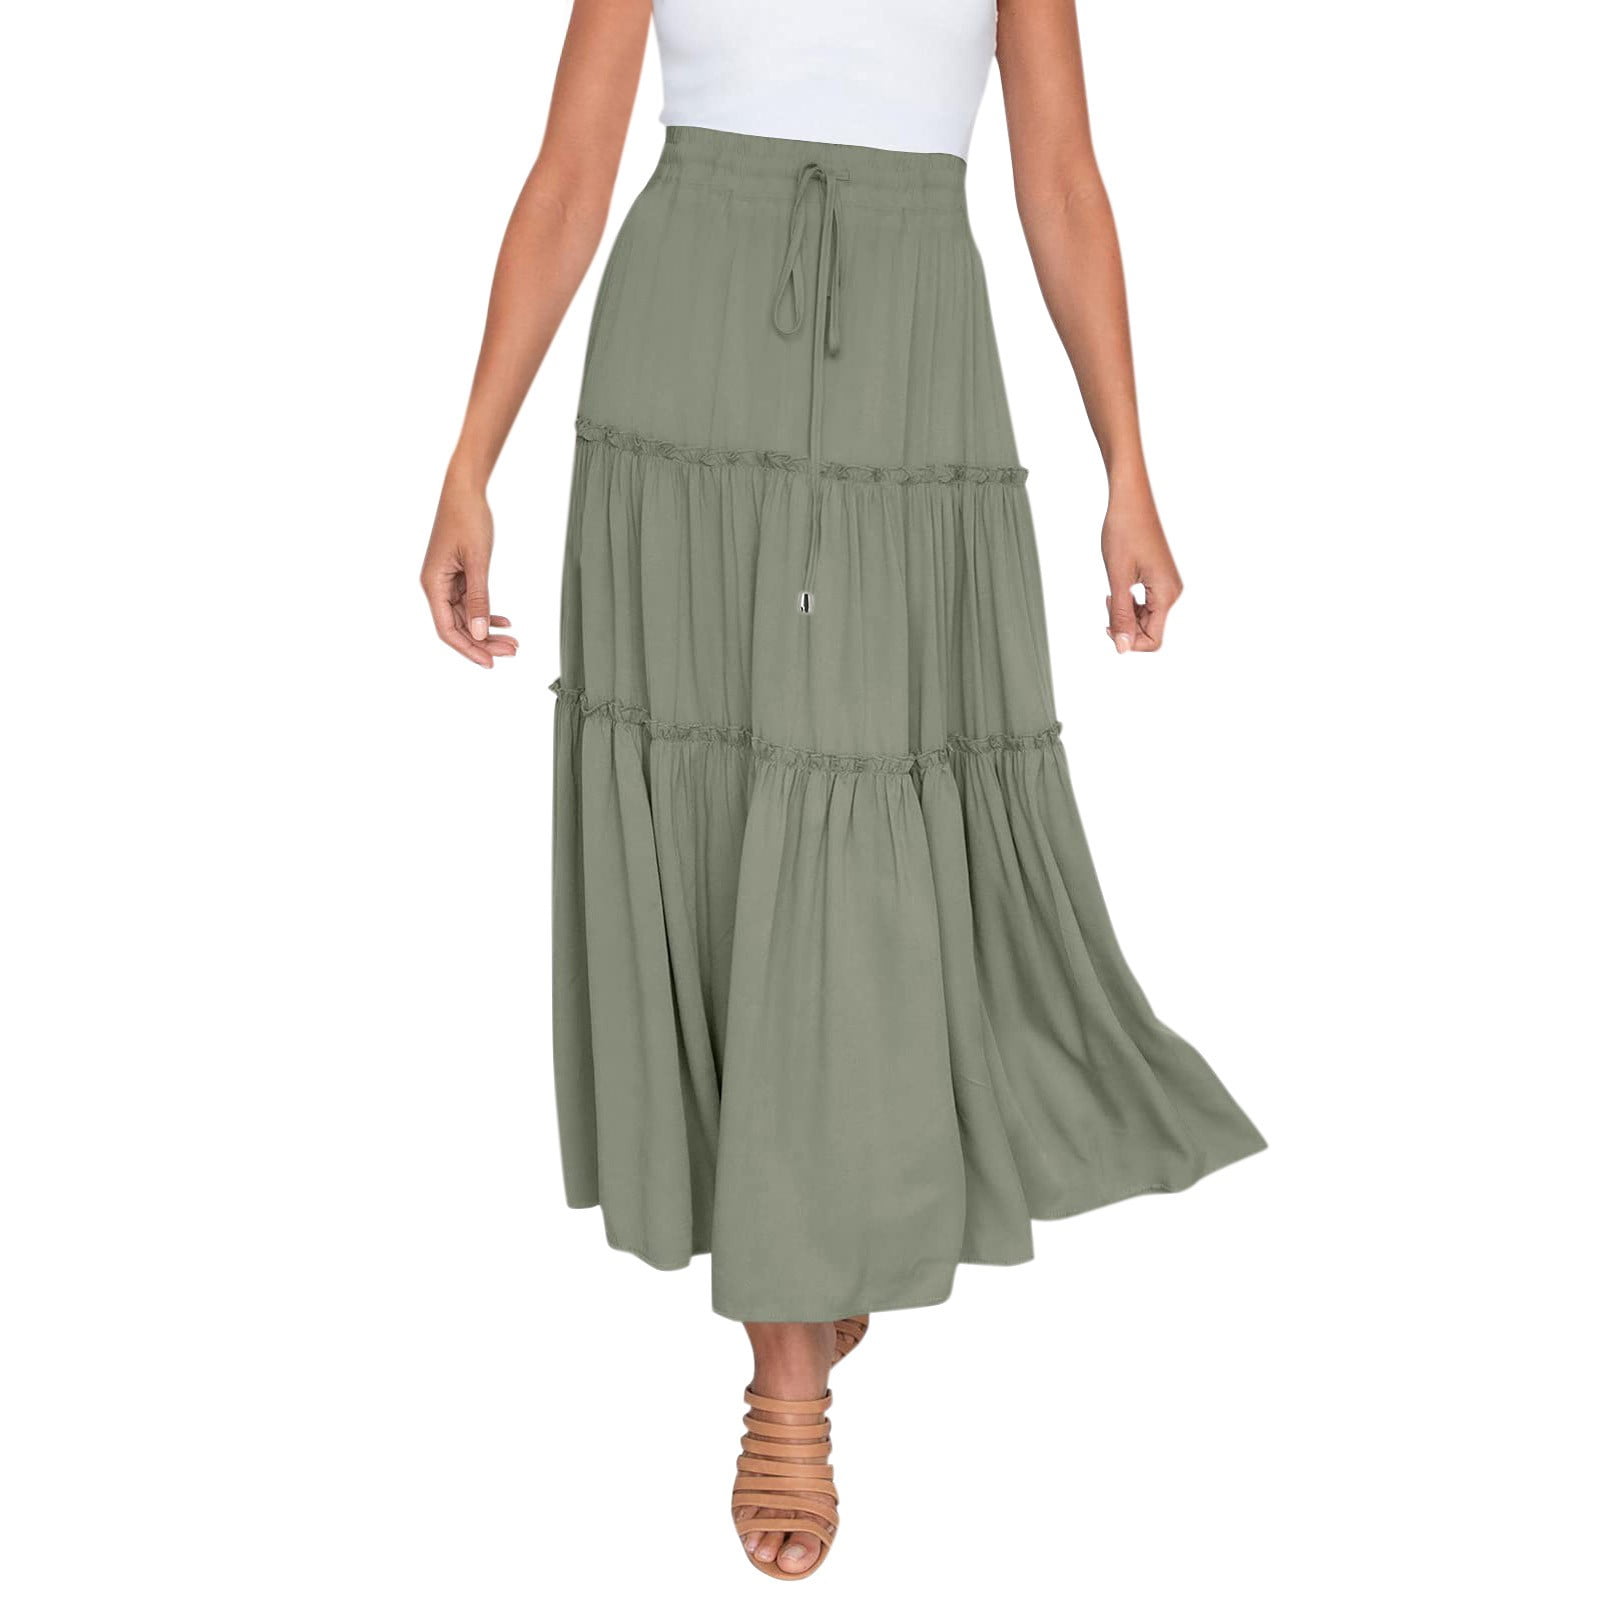 Skirts For Women S Elastic High Waist Boho Maxi Skirt Ruffle A Line ...